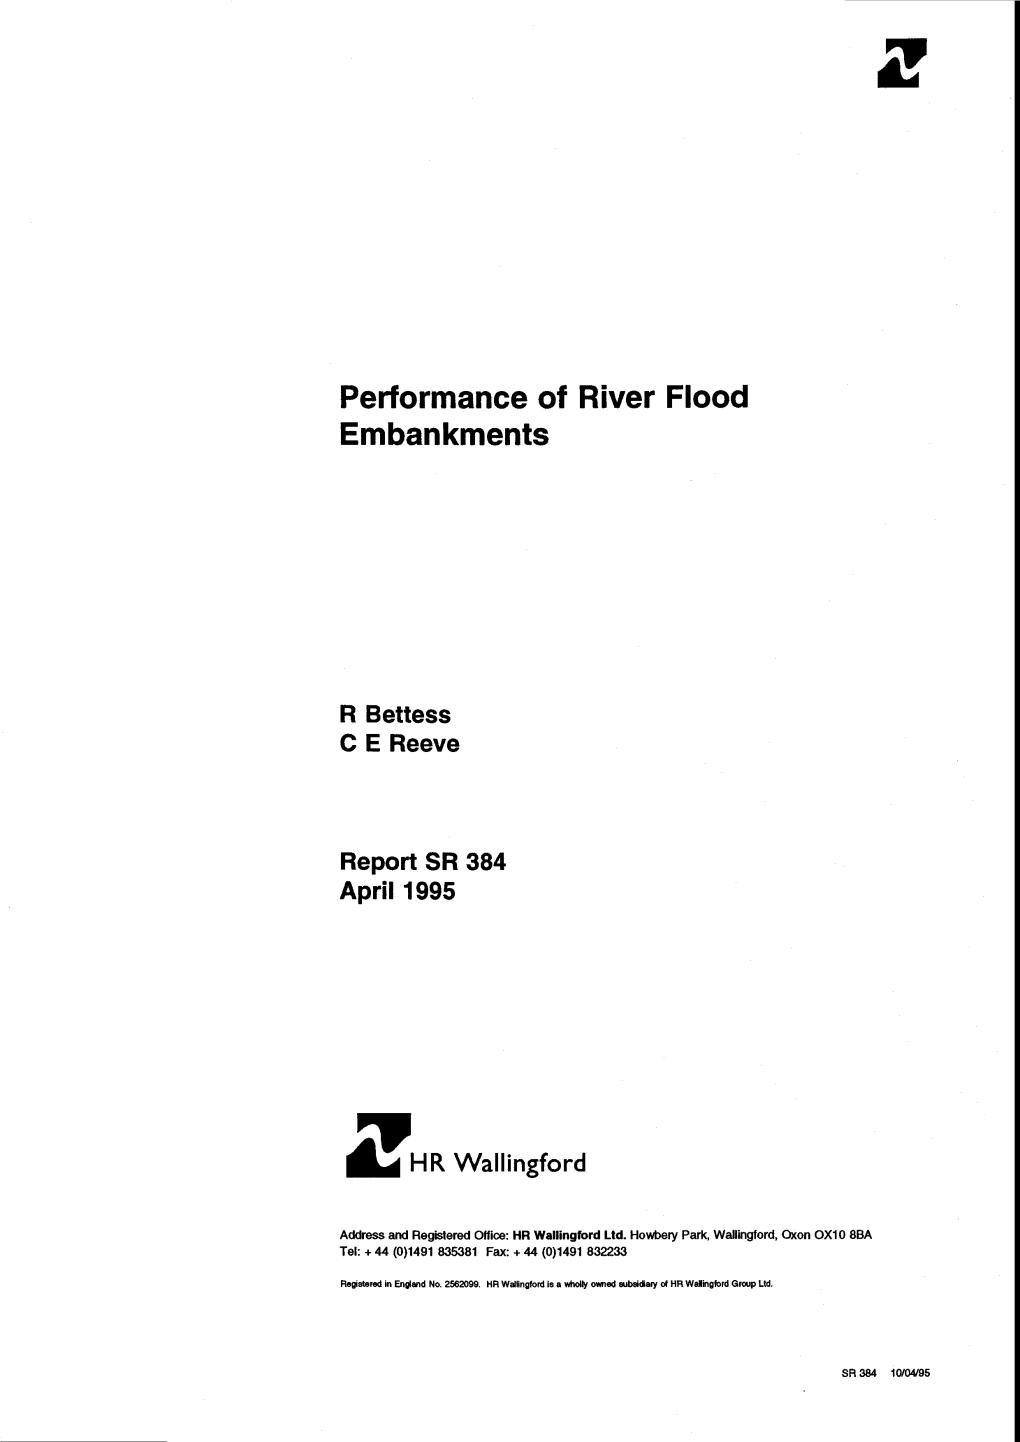 Performance of River Flood Embankments